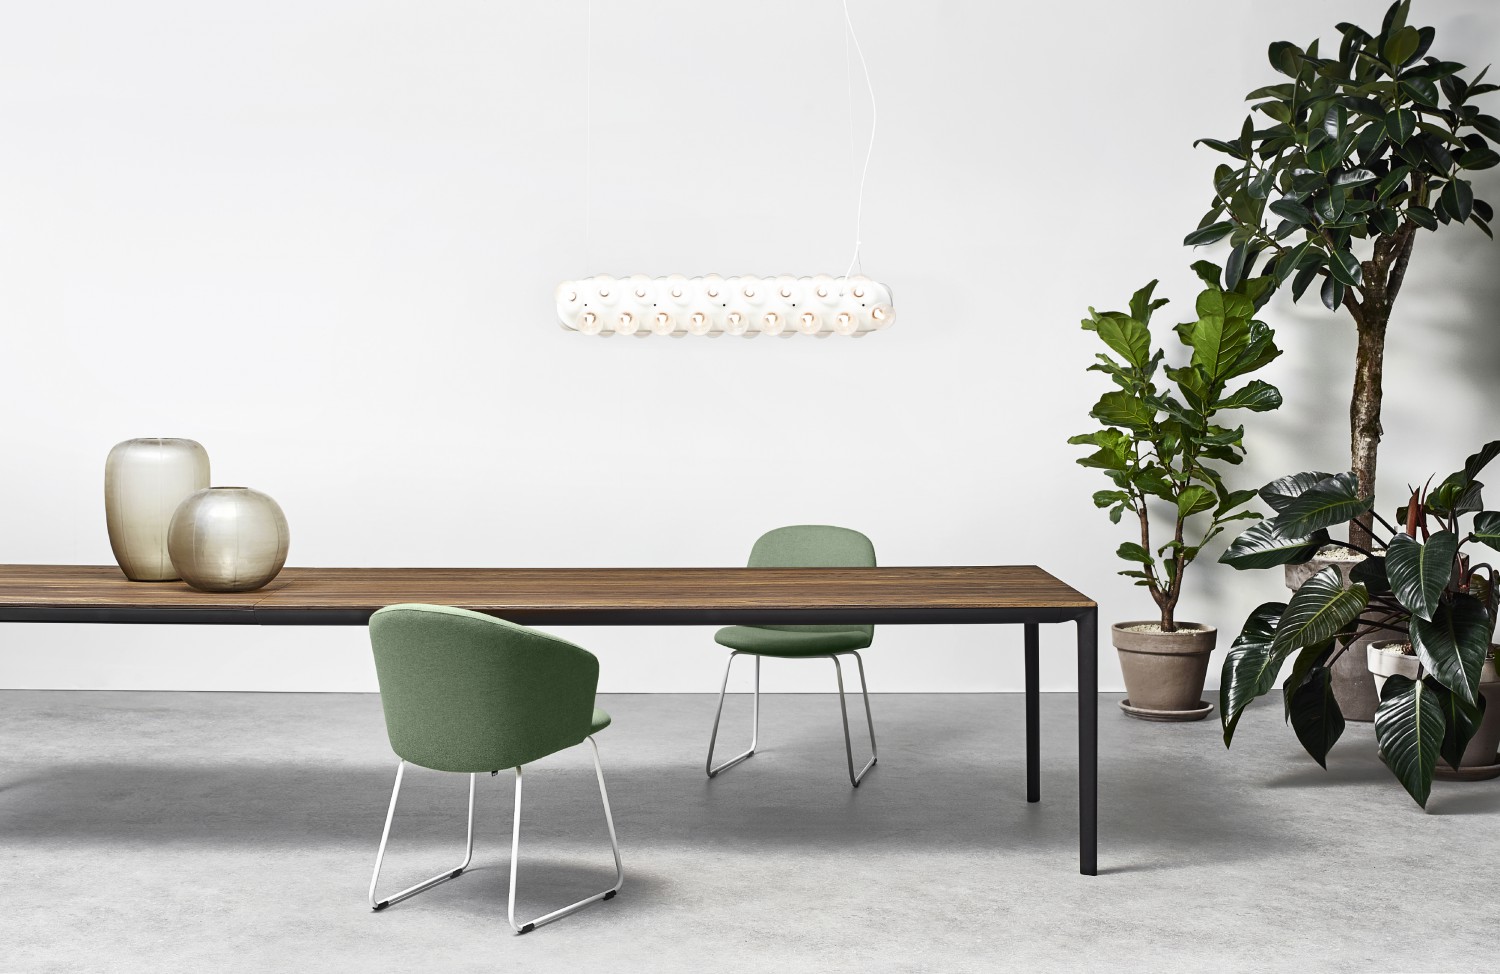 Arco - Shift table - uitschuifbare design tafel